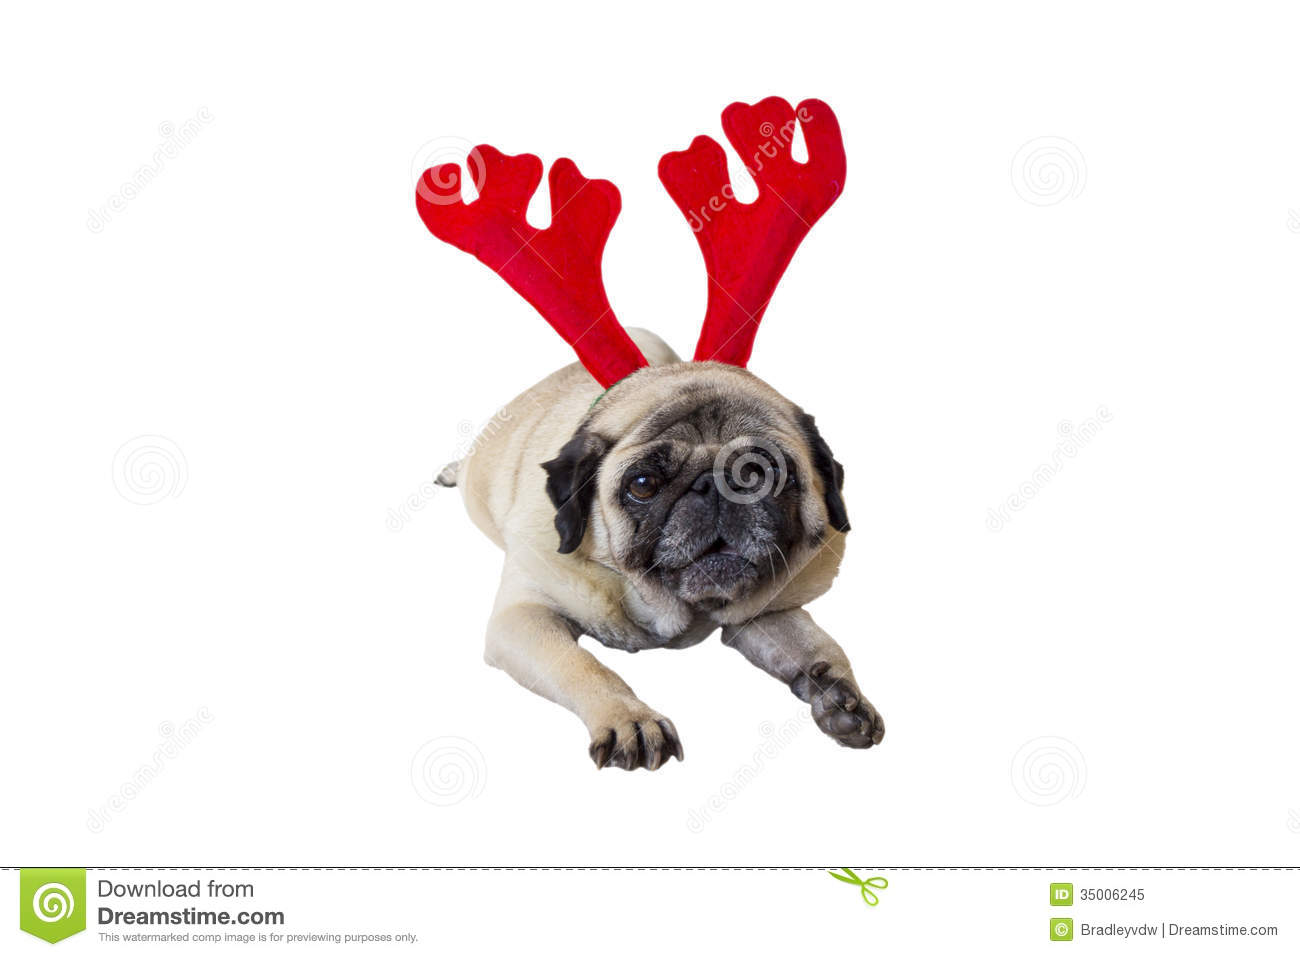 Beige Pug Wearing Christmas Attire 5 Royalty Free Stock Photo   Image